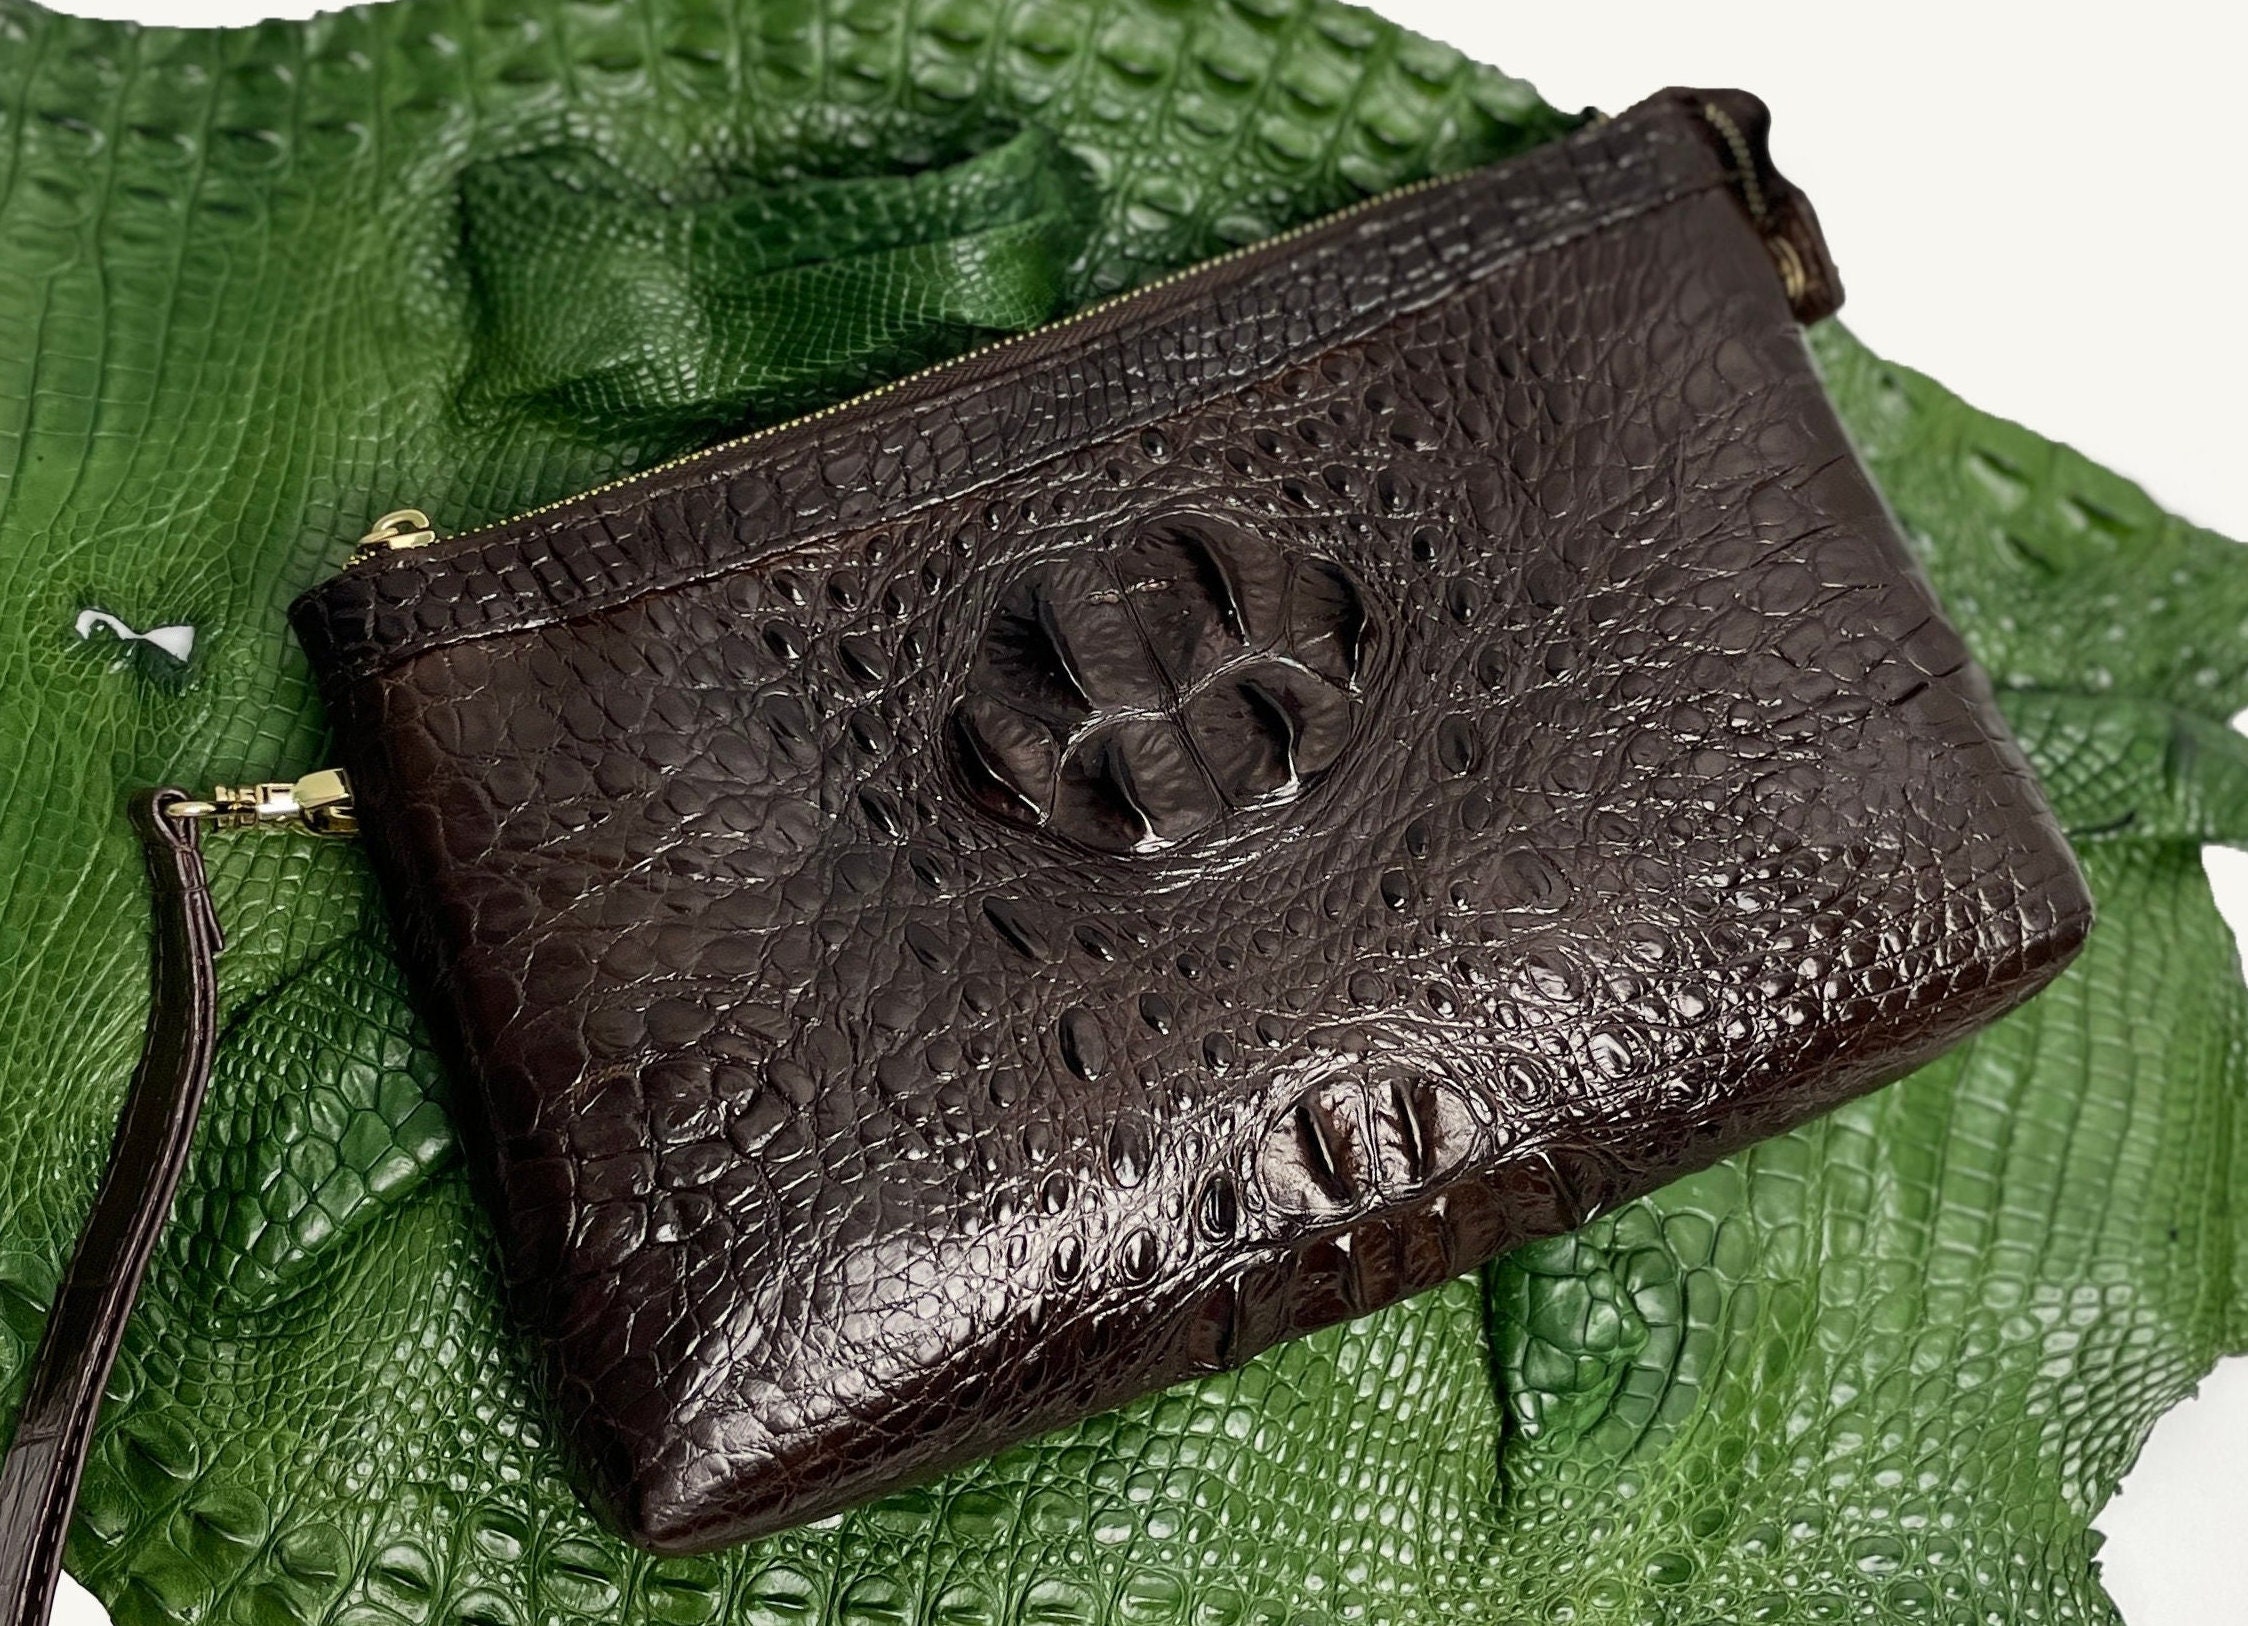 leather luxury mens clutch bag